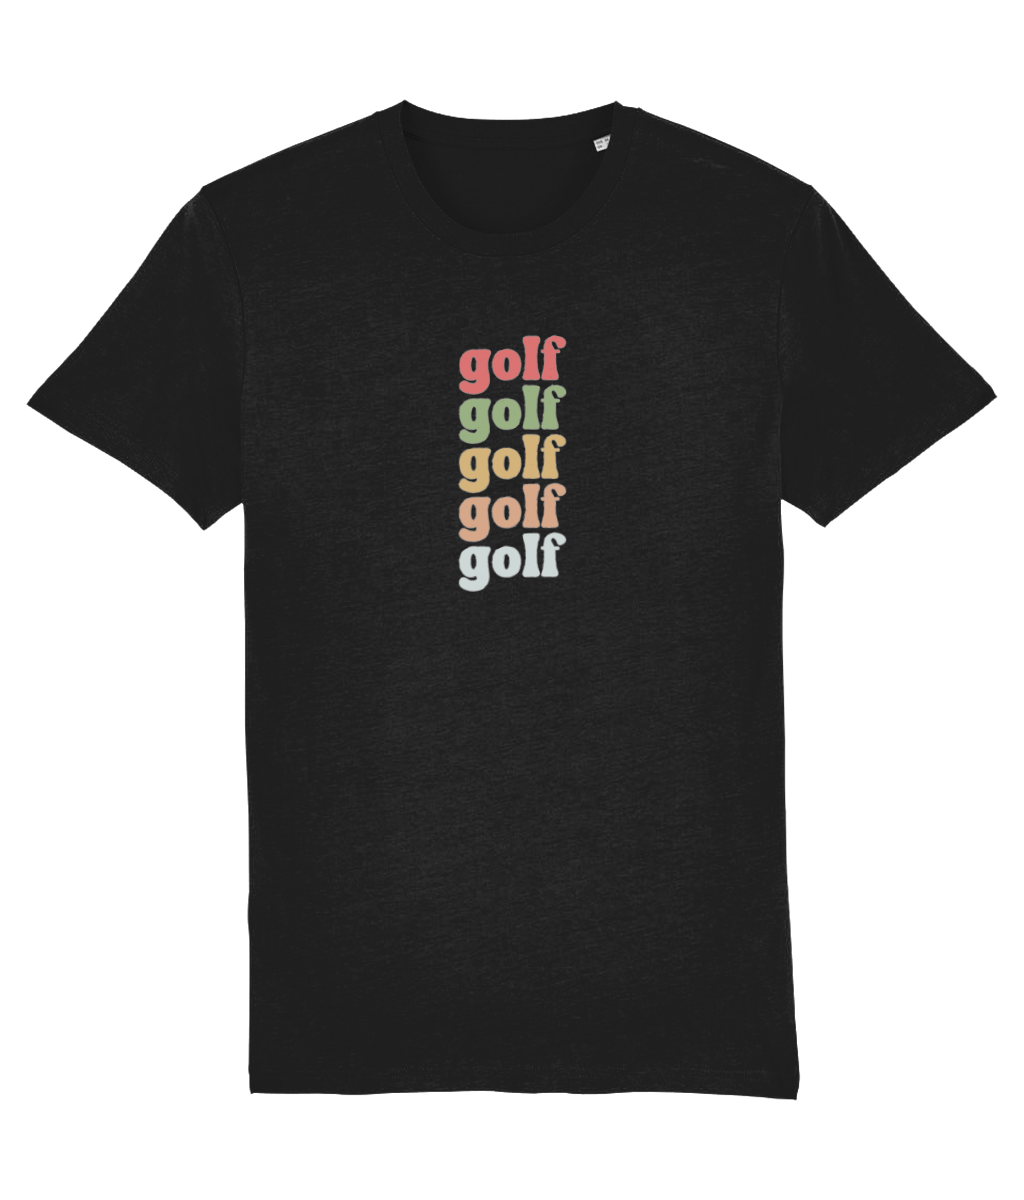 Golf Tshirt for women